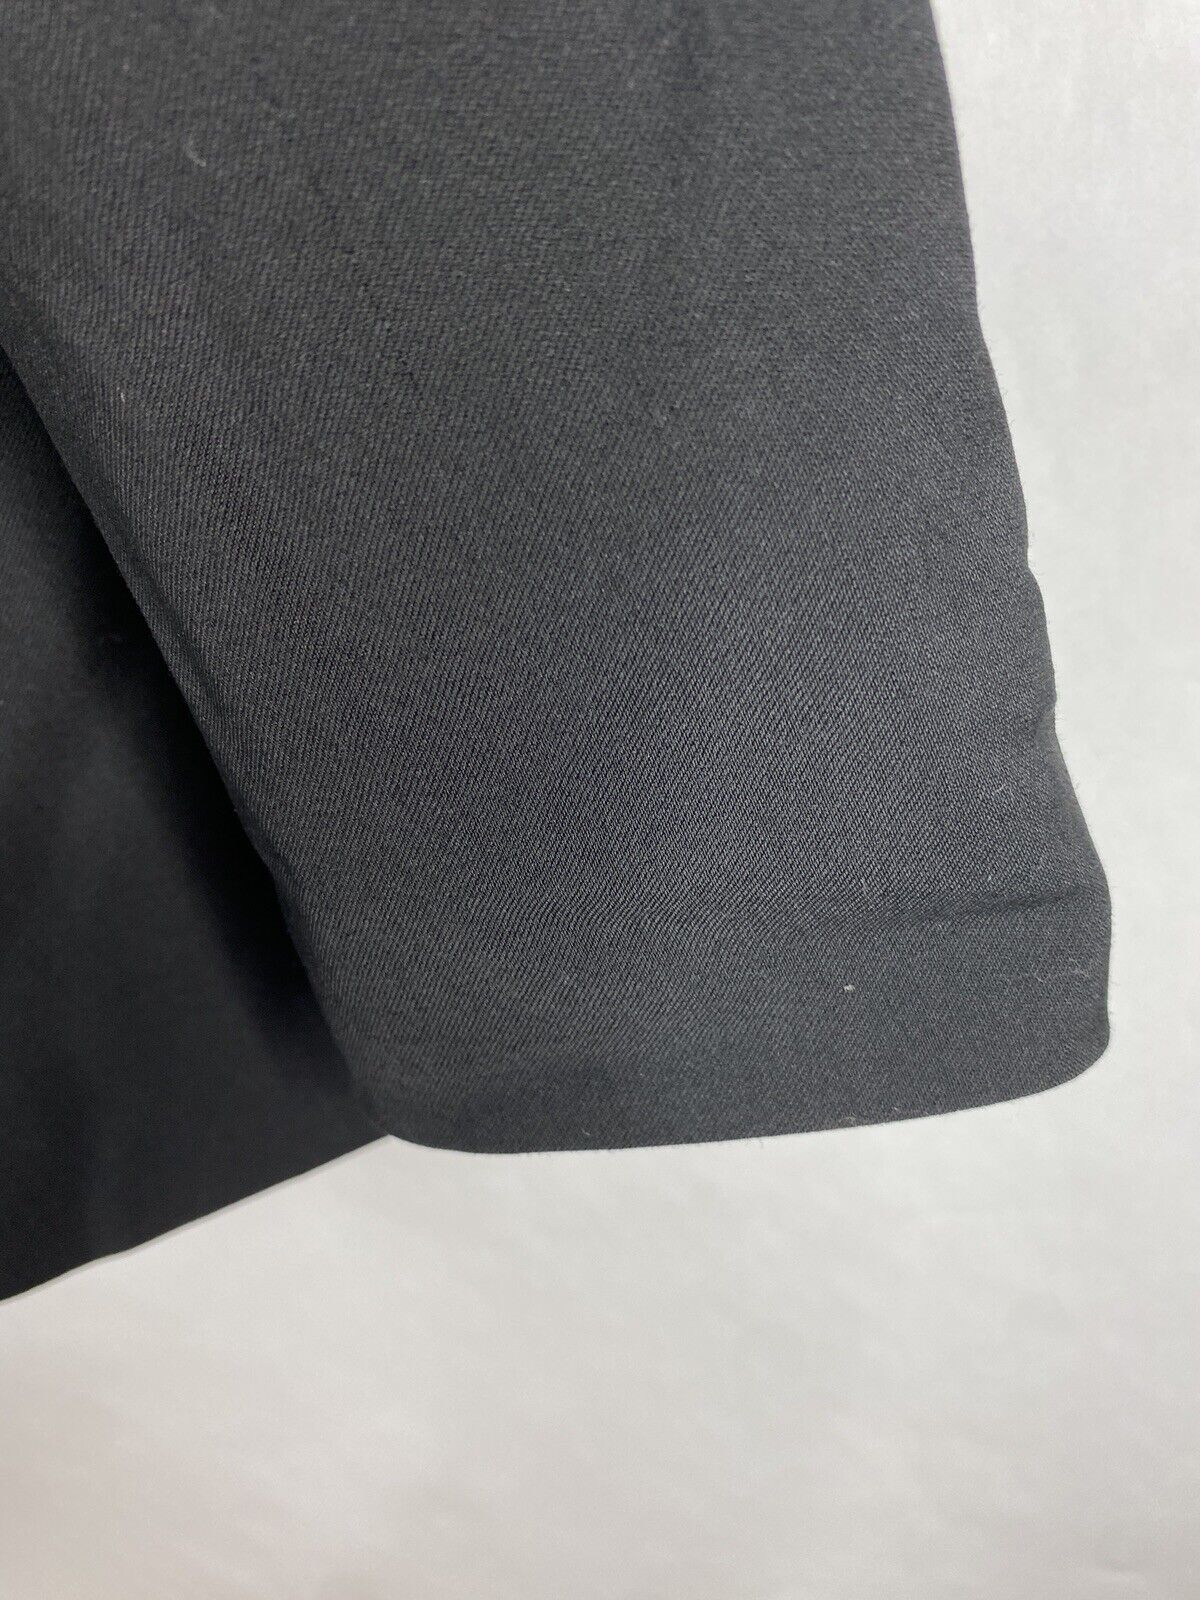 Banana Republic Blazer Mens 42R Black Long Sleeve 100% Wool Pockets  Tailored Fit